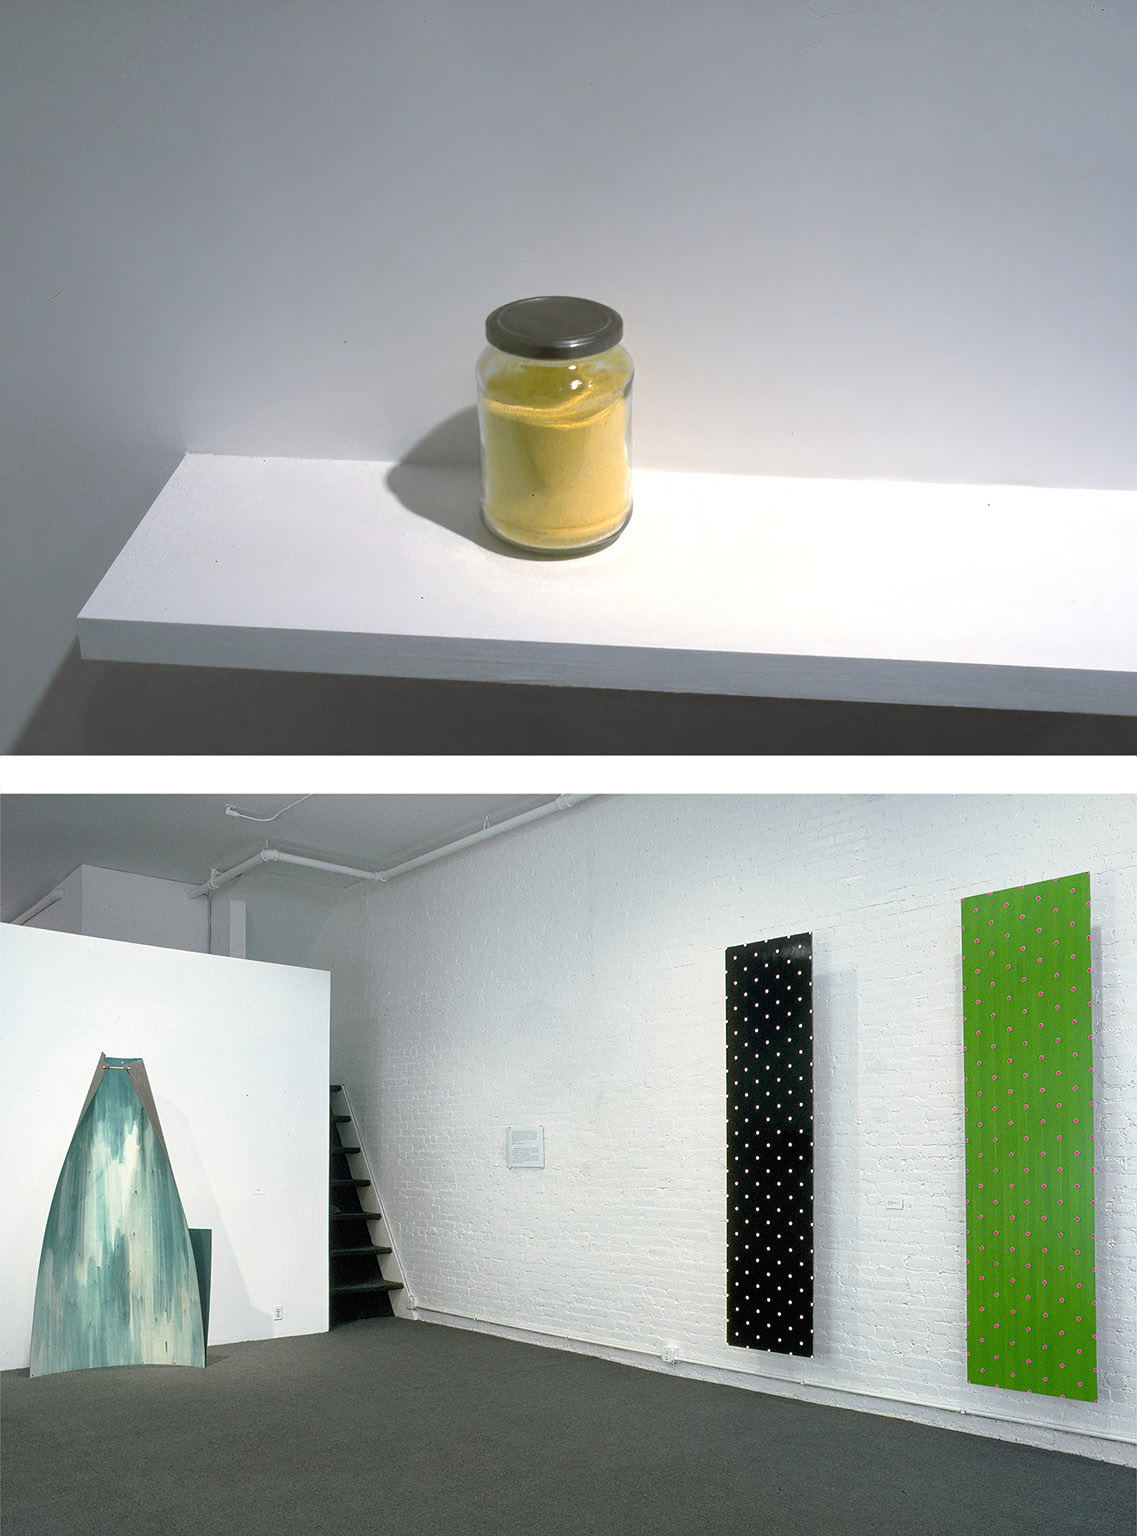 installation views of pooen jar, sculpture, and paintings